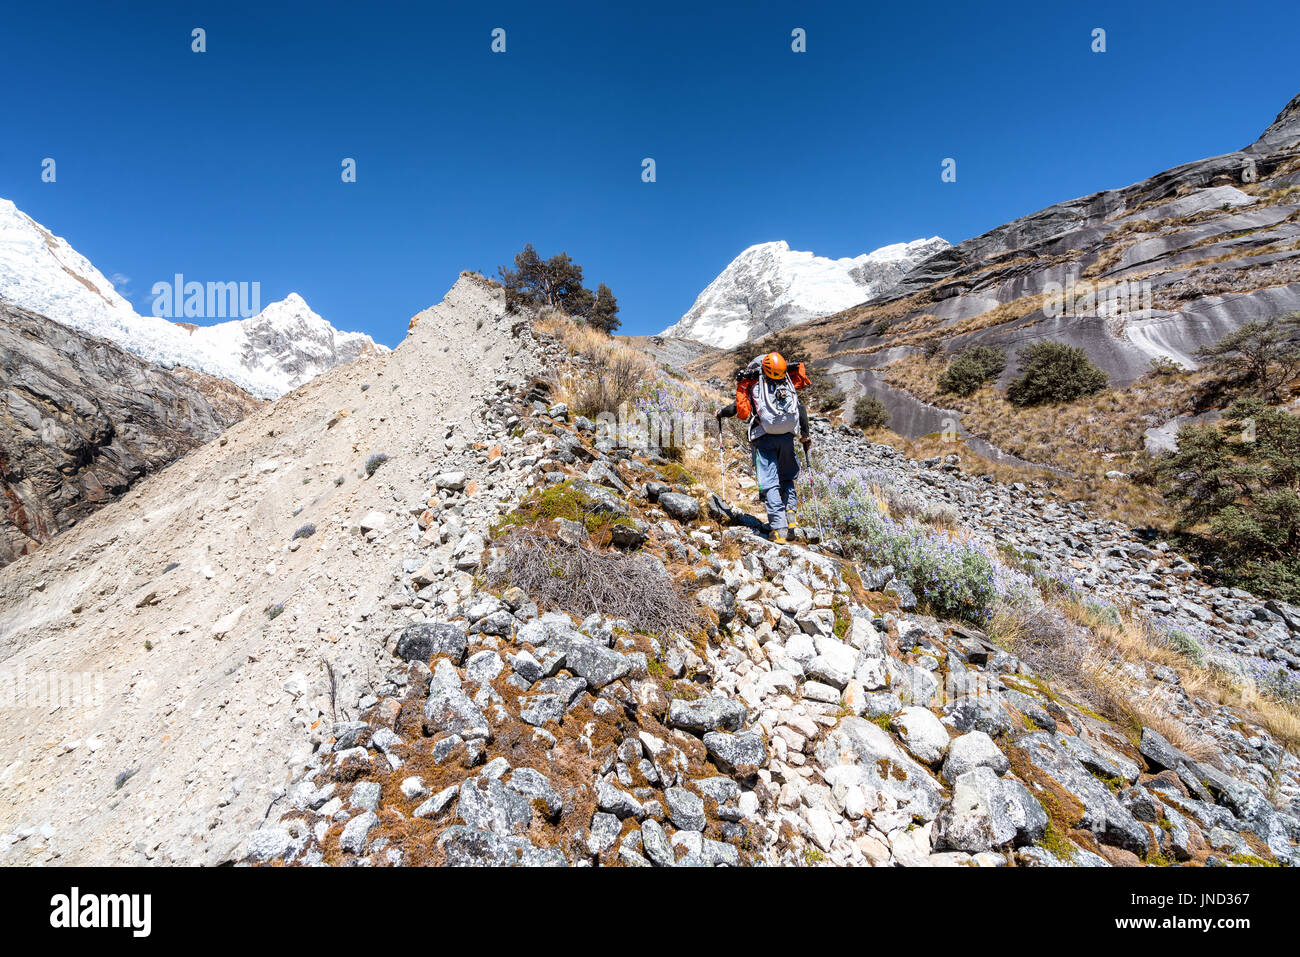 Heading up to Artesonraju's moraine/high camp, Santa Cuz valley, Cordillera Blanca, Peru Stock Photo